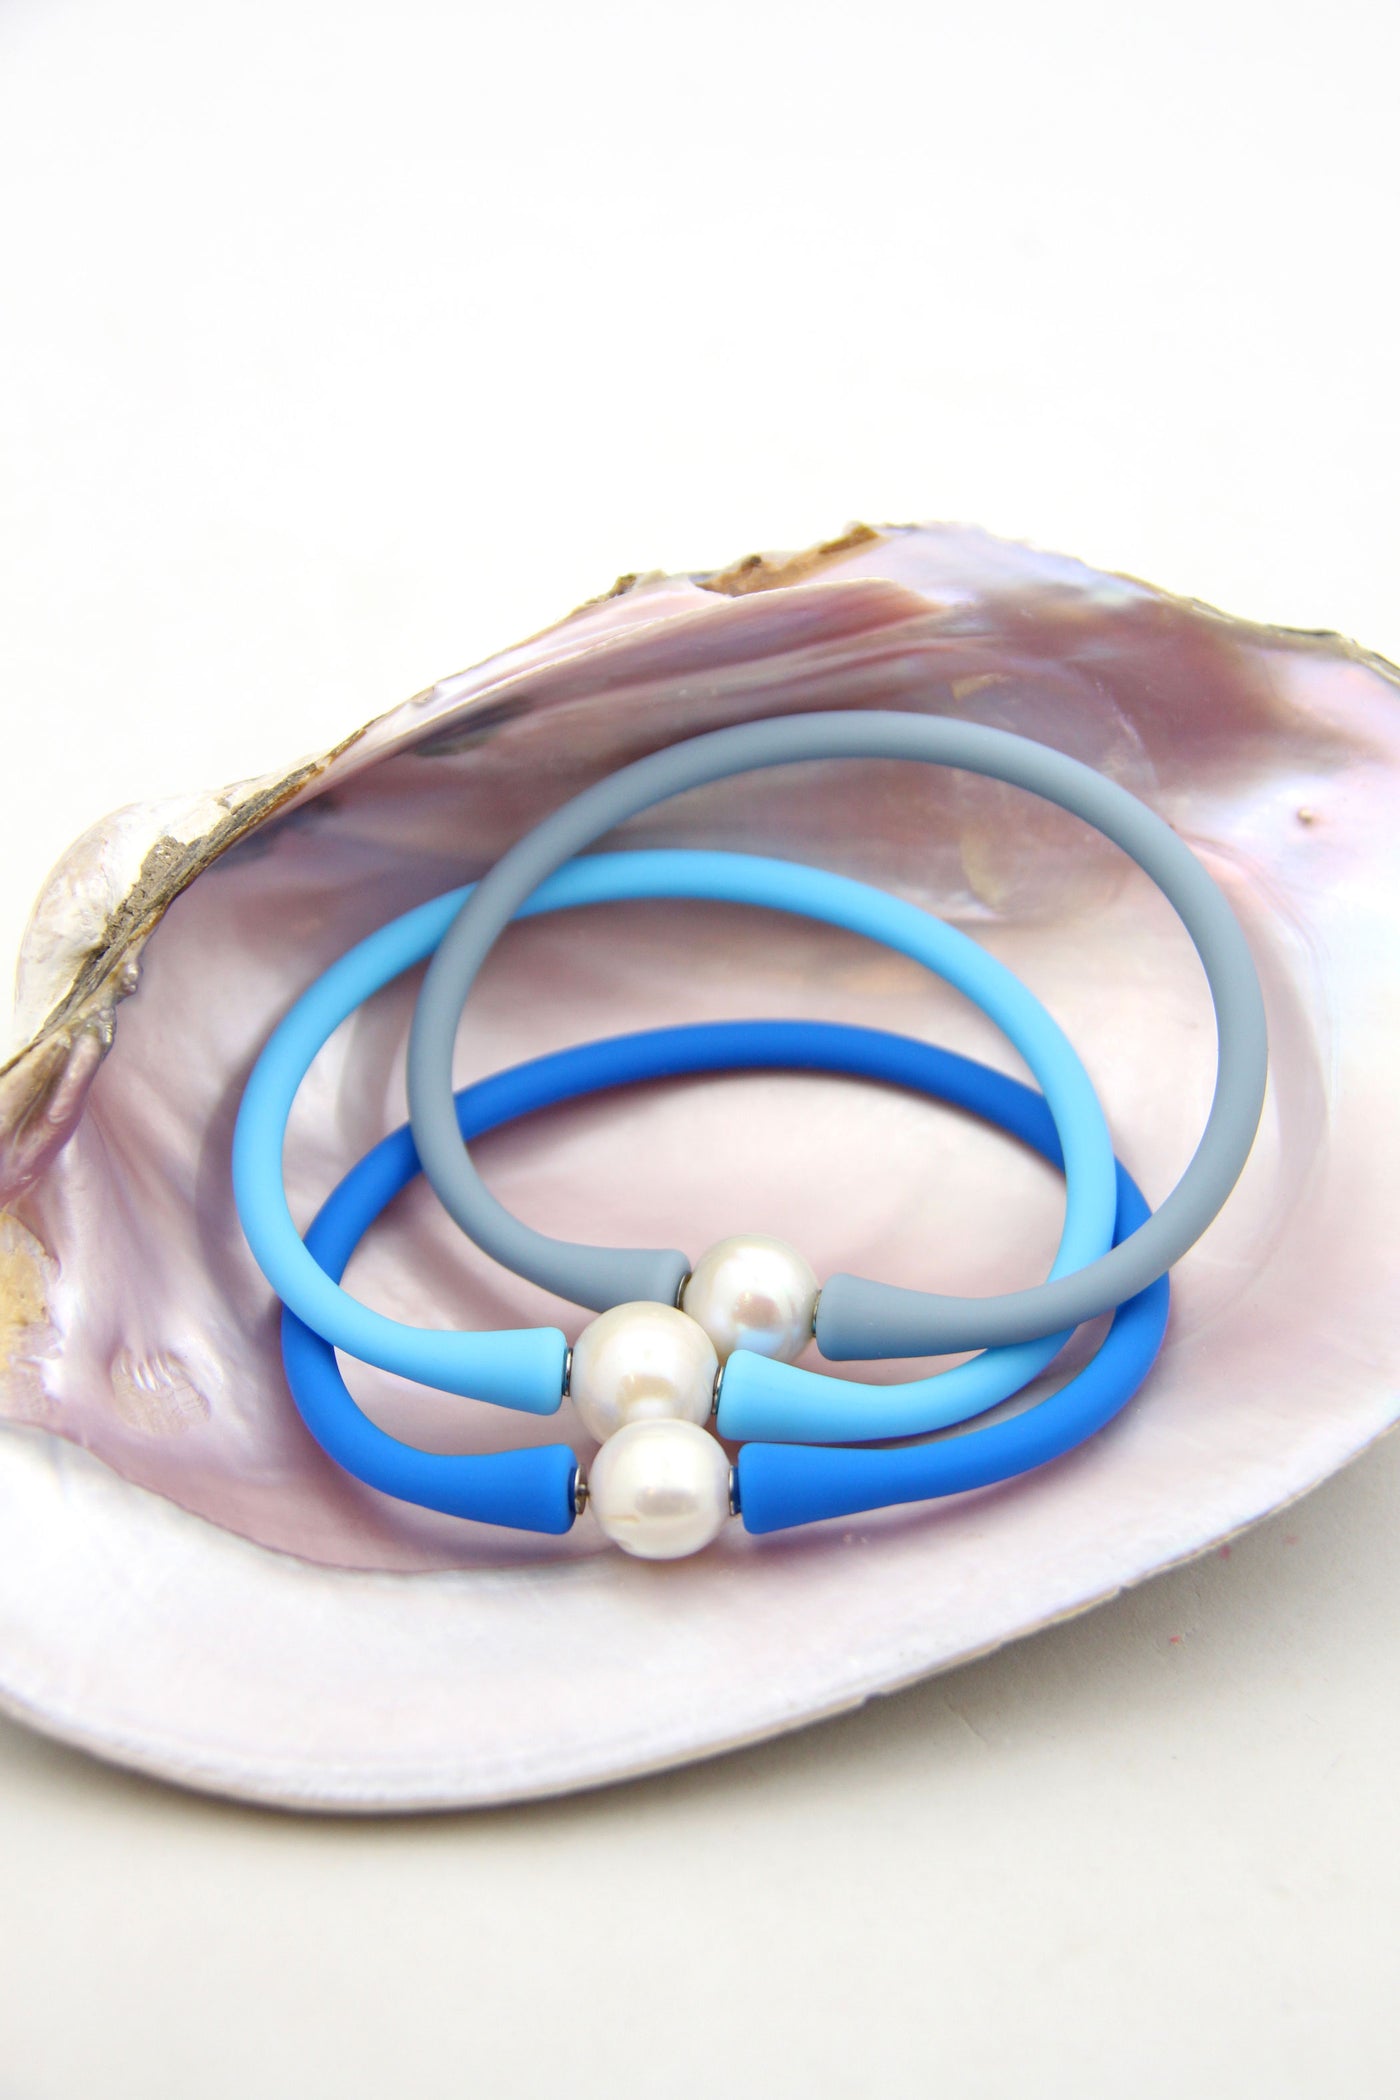 Splash Bracelet Set: Blue Silicone & Pearl Waterproof Bangles, Mermaidcore Jewelry